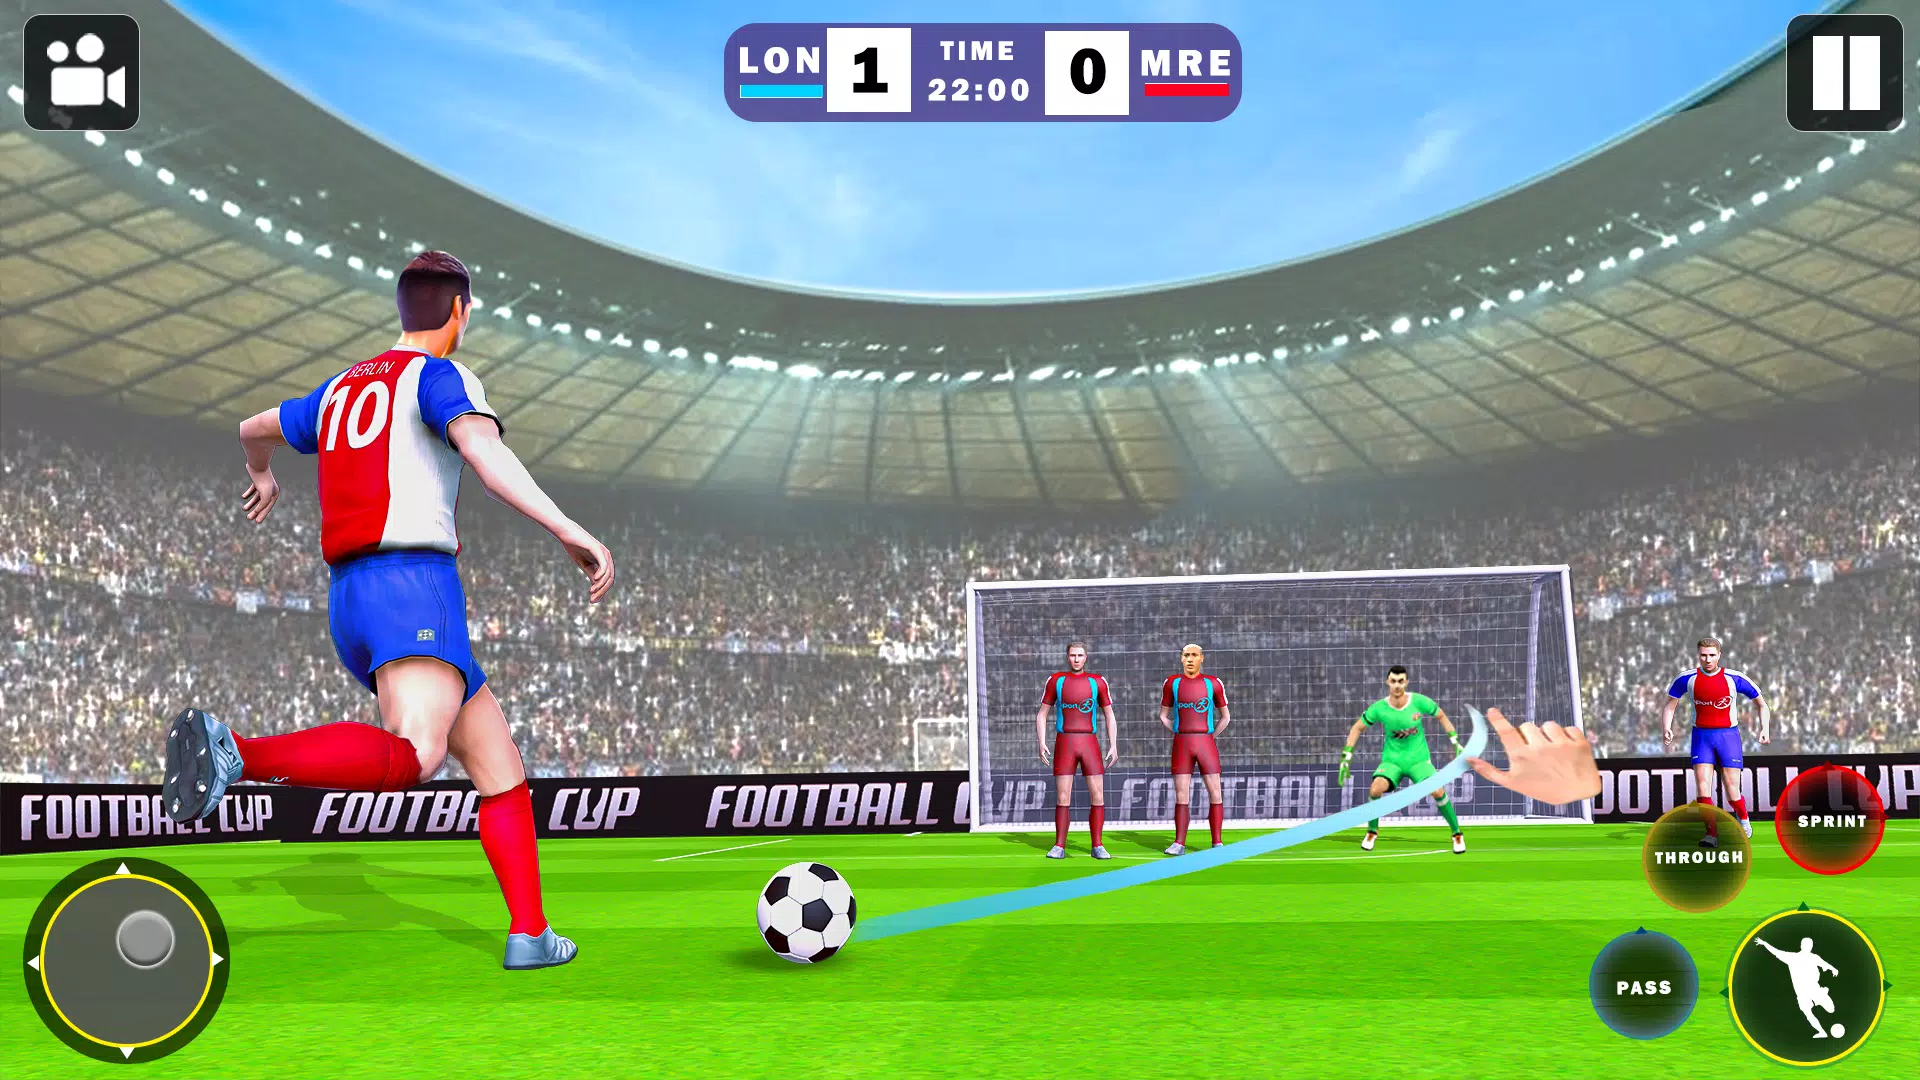 Football League 2023 APK para Android - Download